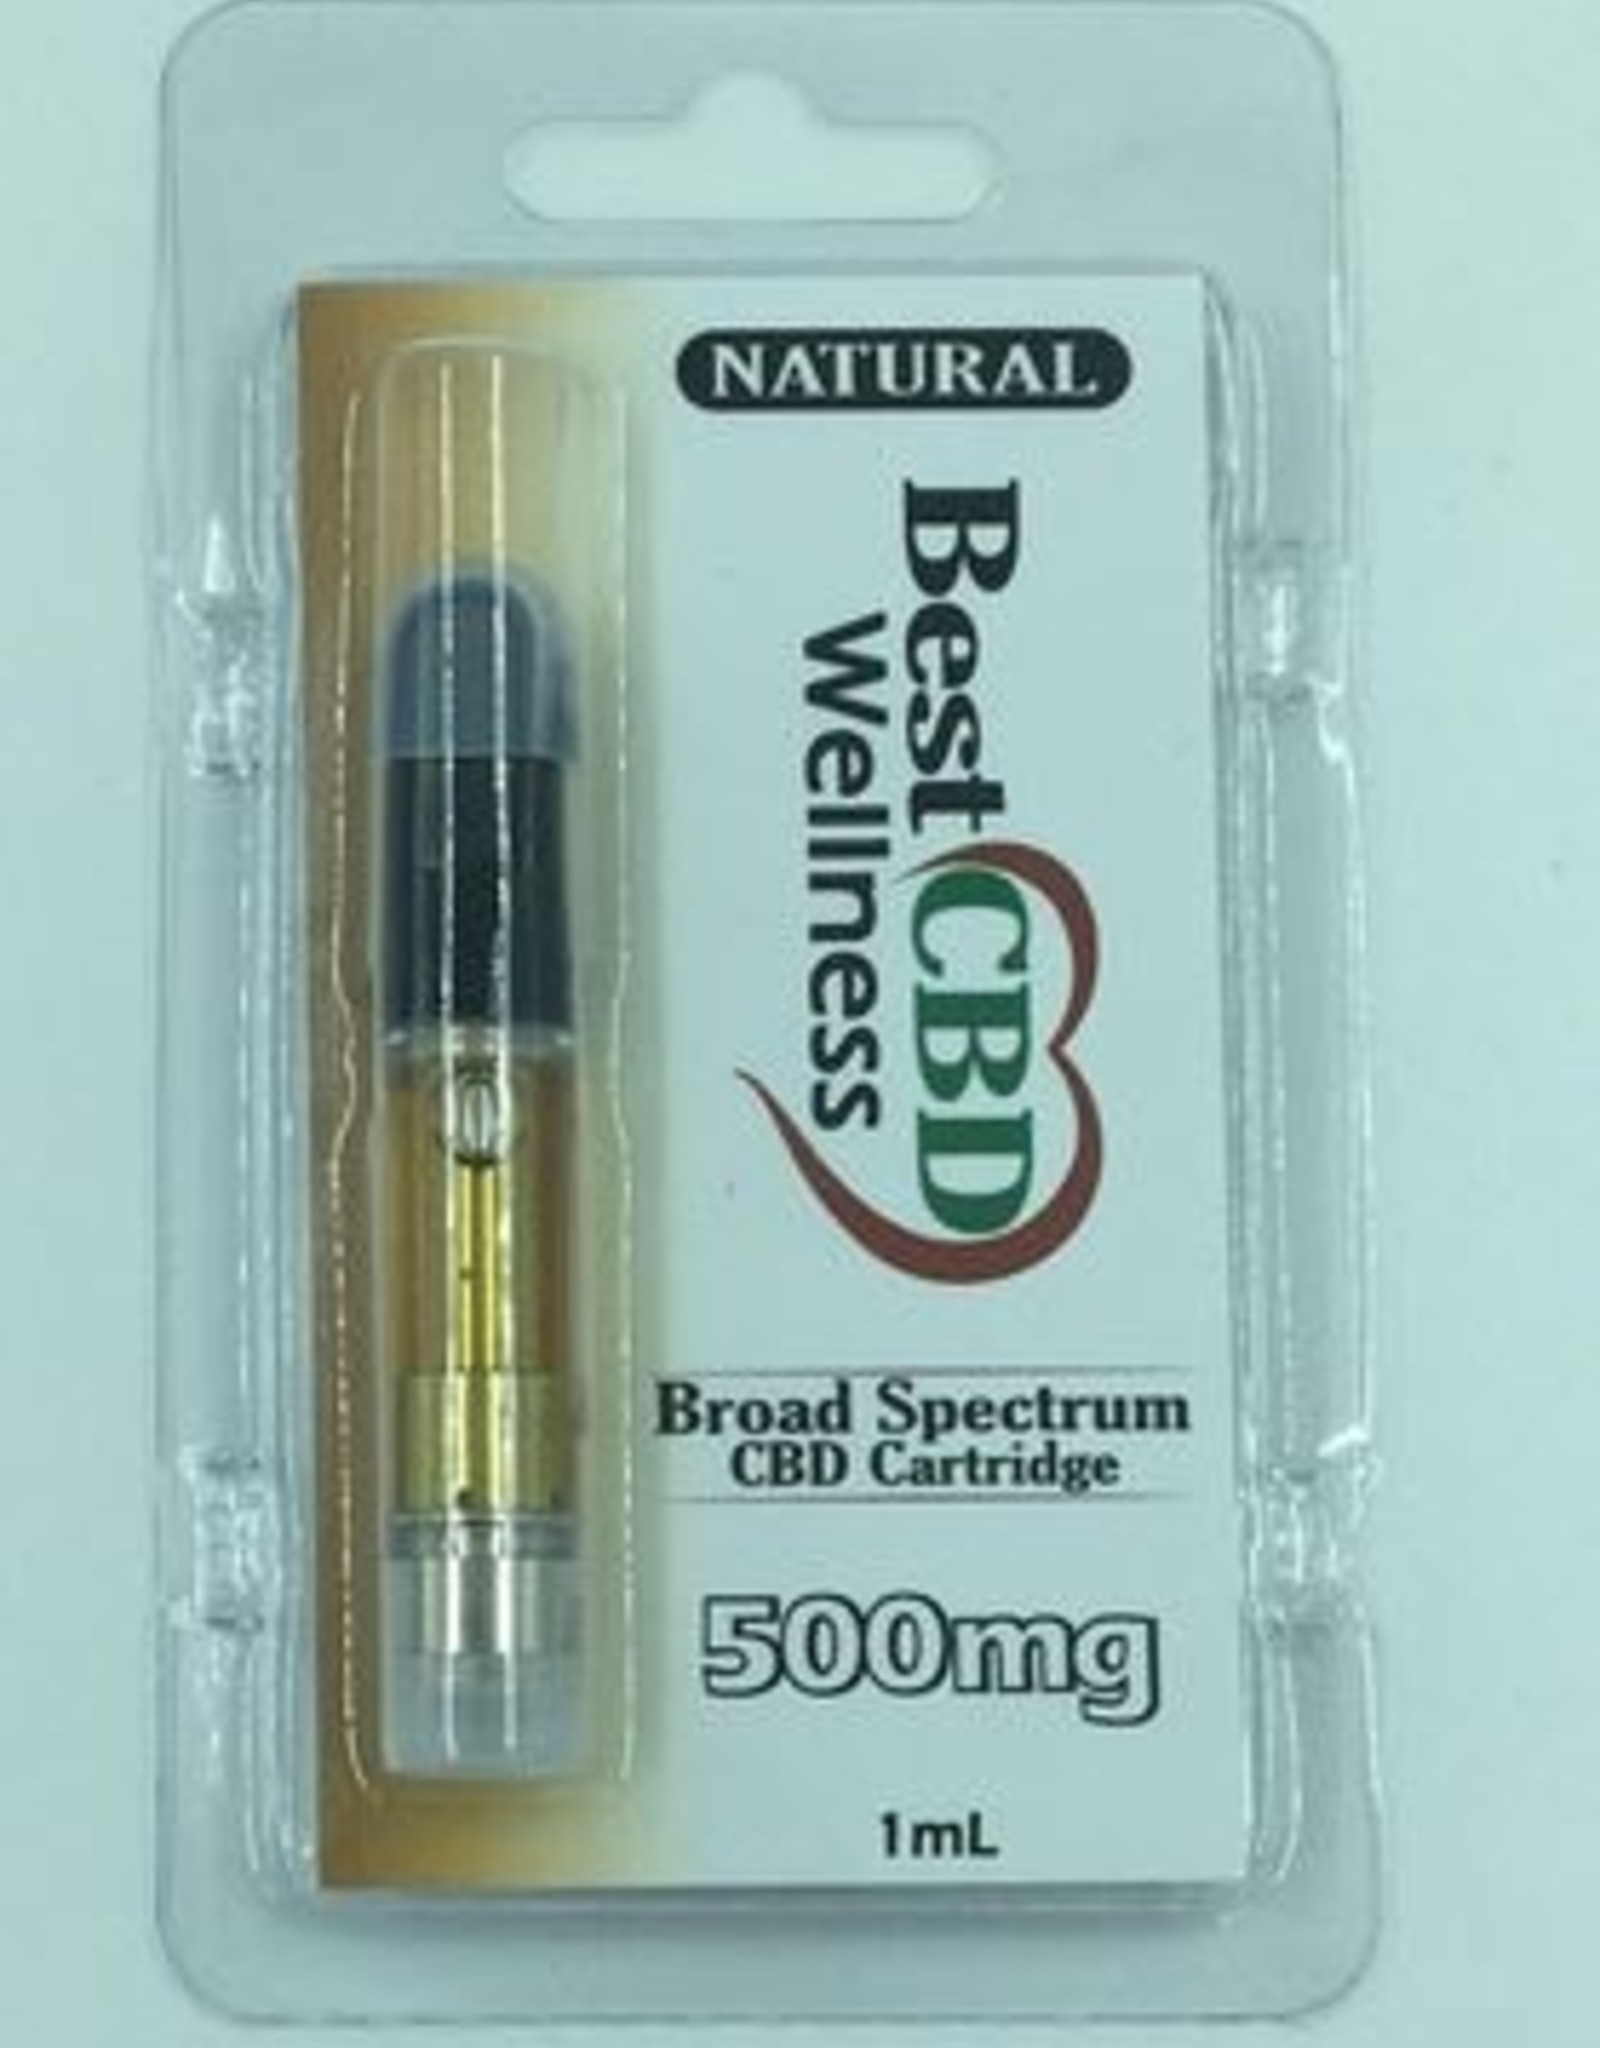 Best CBD Wellness Broad Spectrum CBD Oil Vape Cartridge 500mg Natural